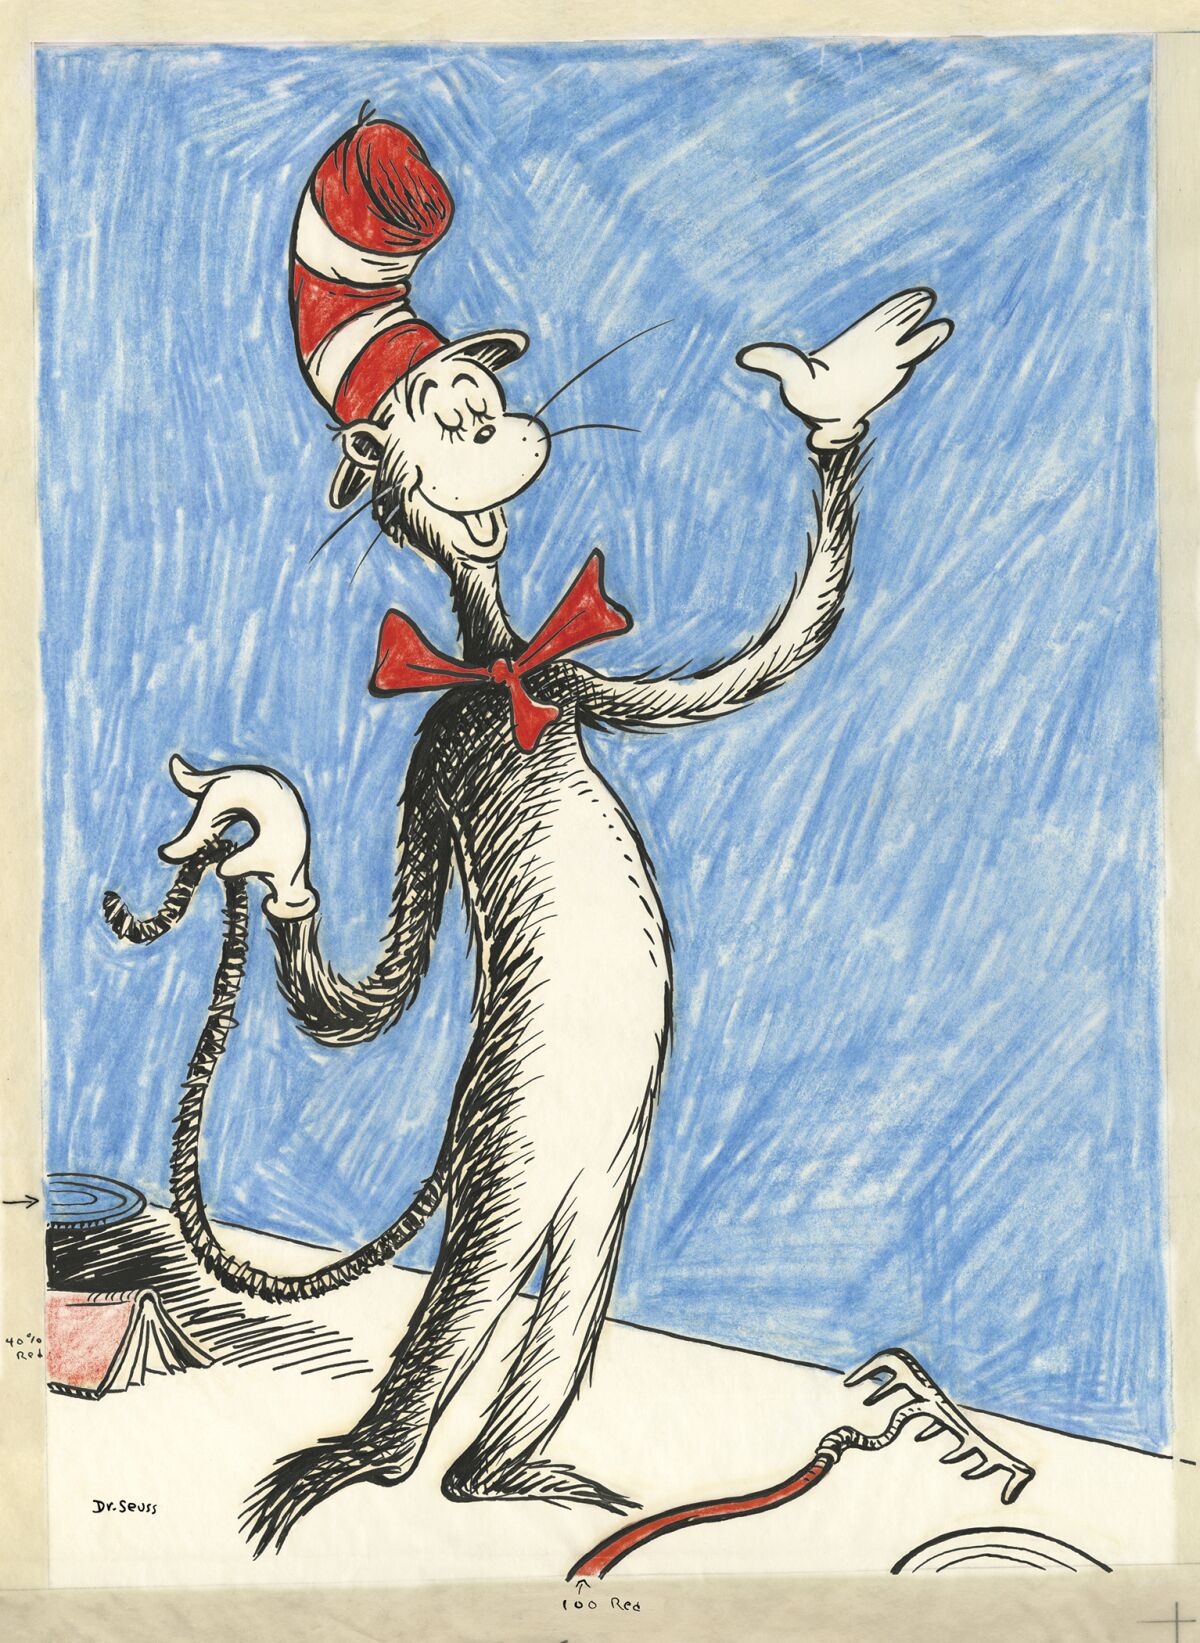 Art by Theodor Seuss Geisel (aka Dr. Seuss)